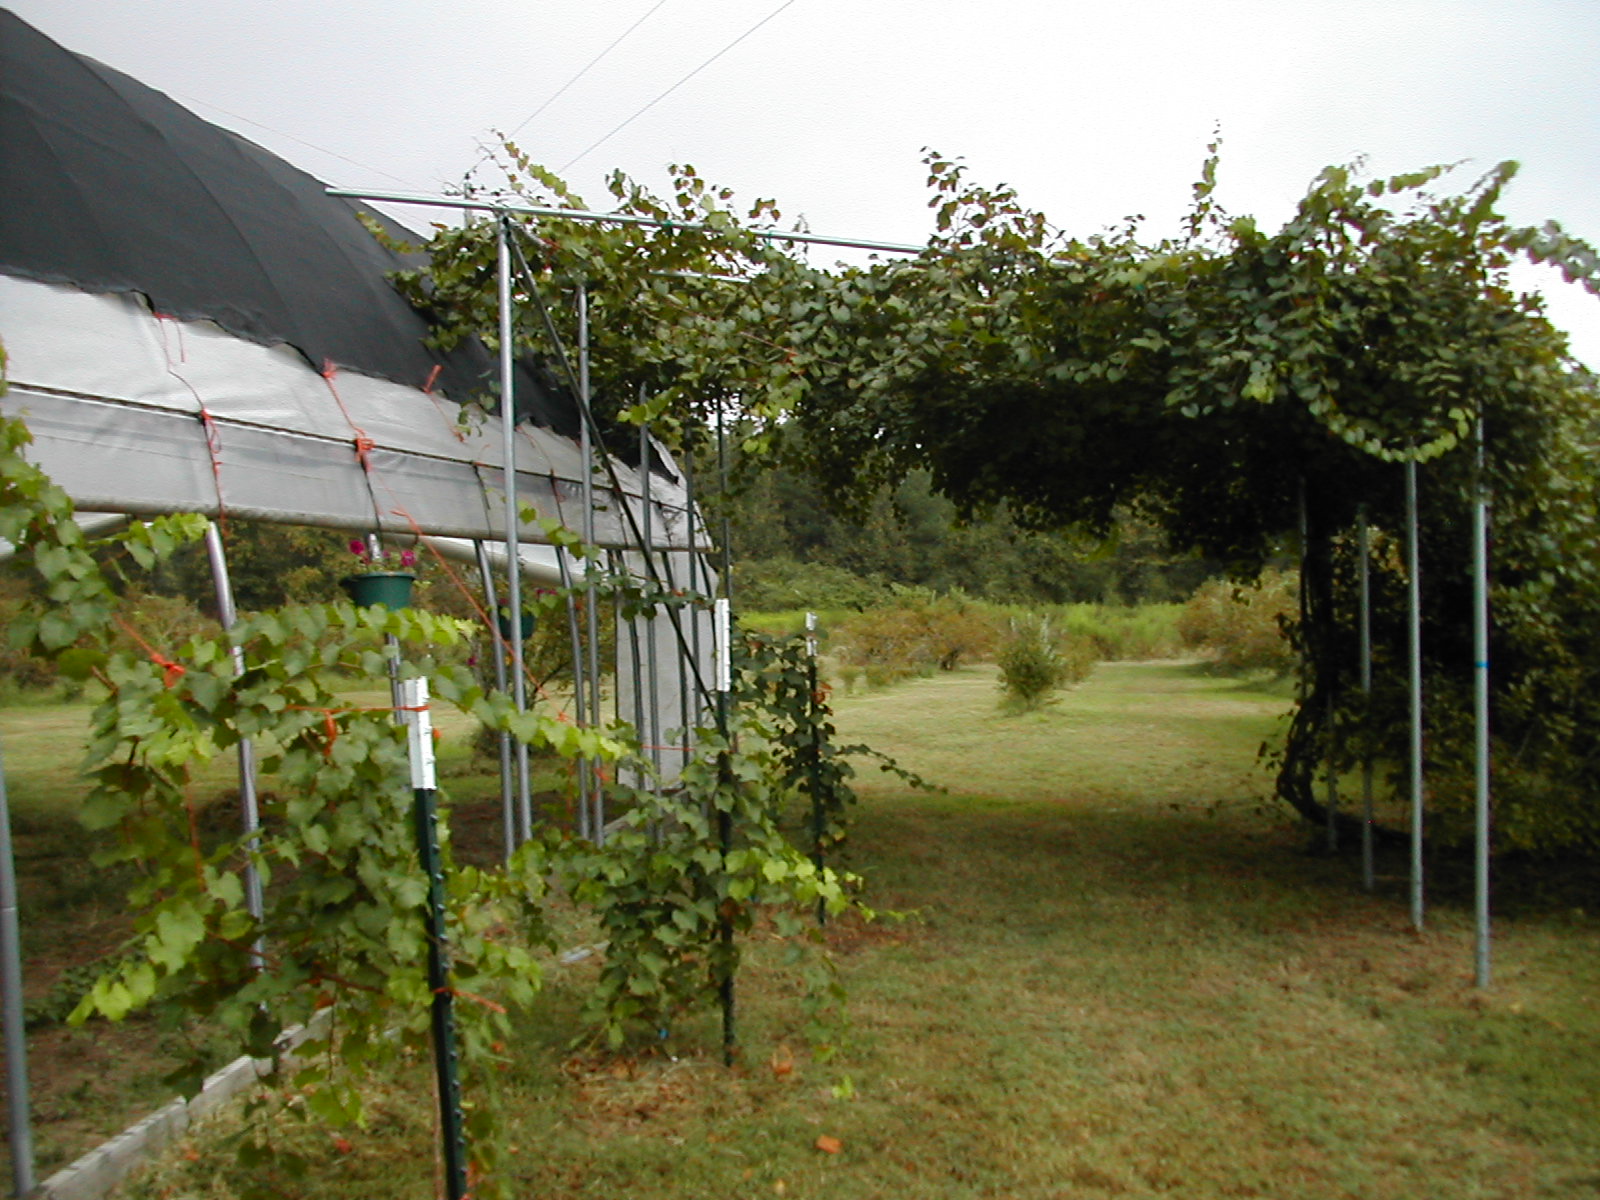 vines providing shade to greenhouse